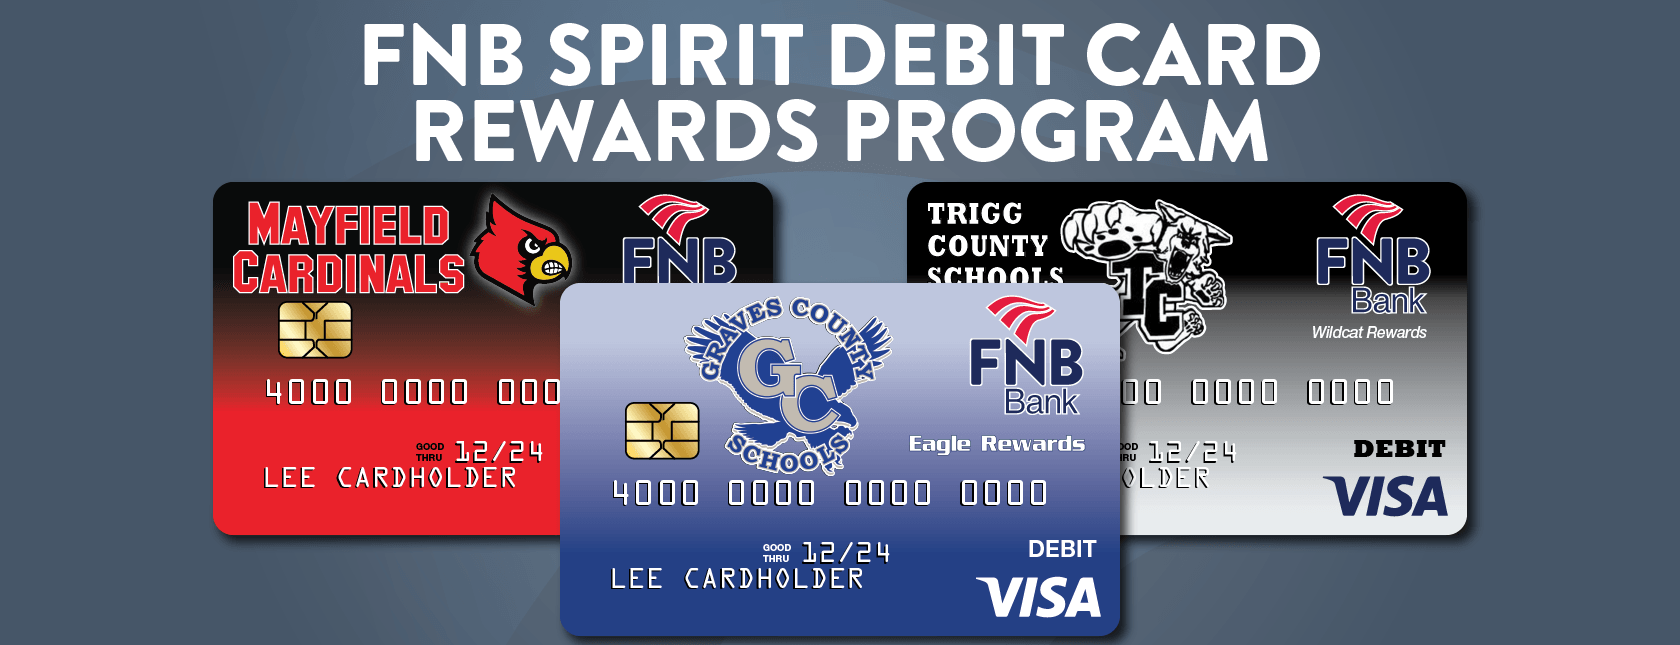 FNB Donates to Mayfield, Graves Co and Trigg Co Schools through spirit debit card reward program